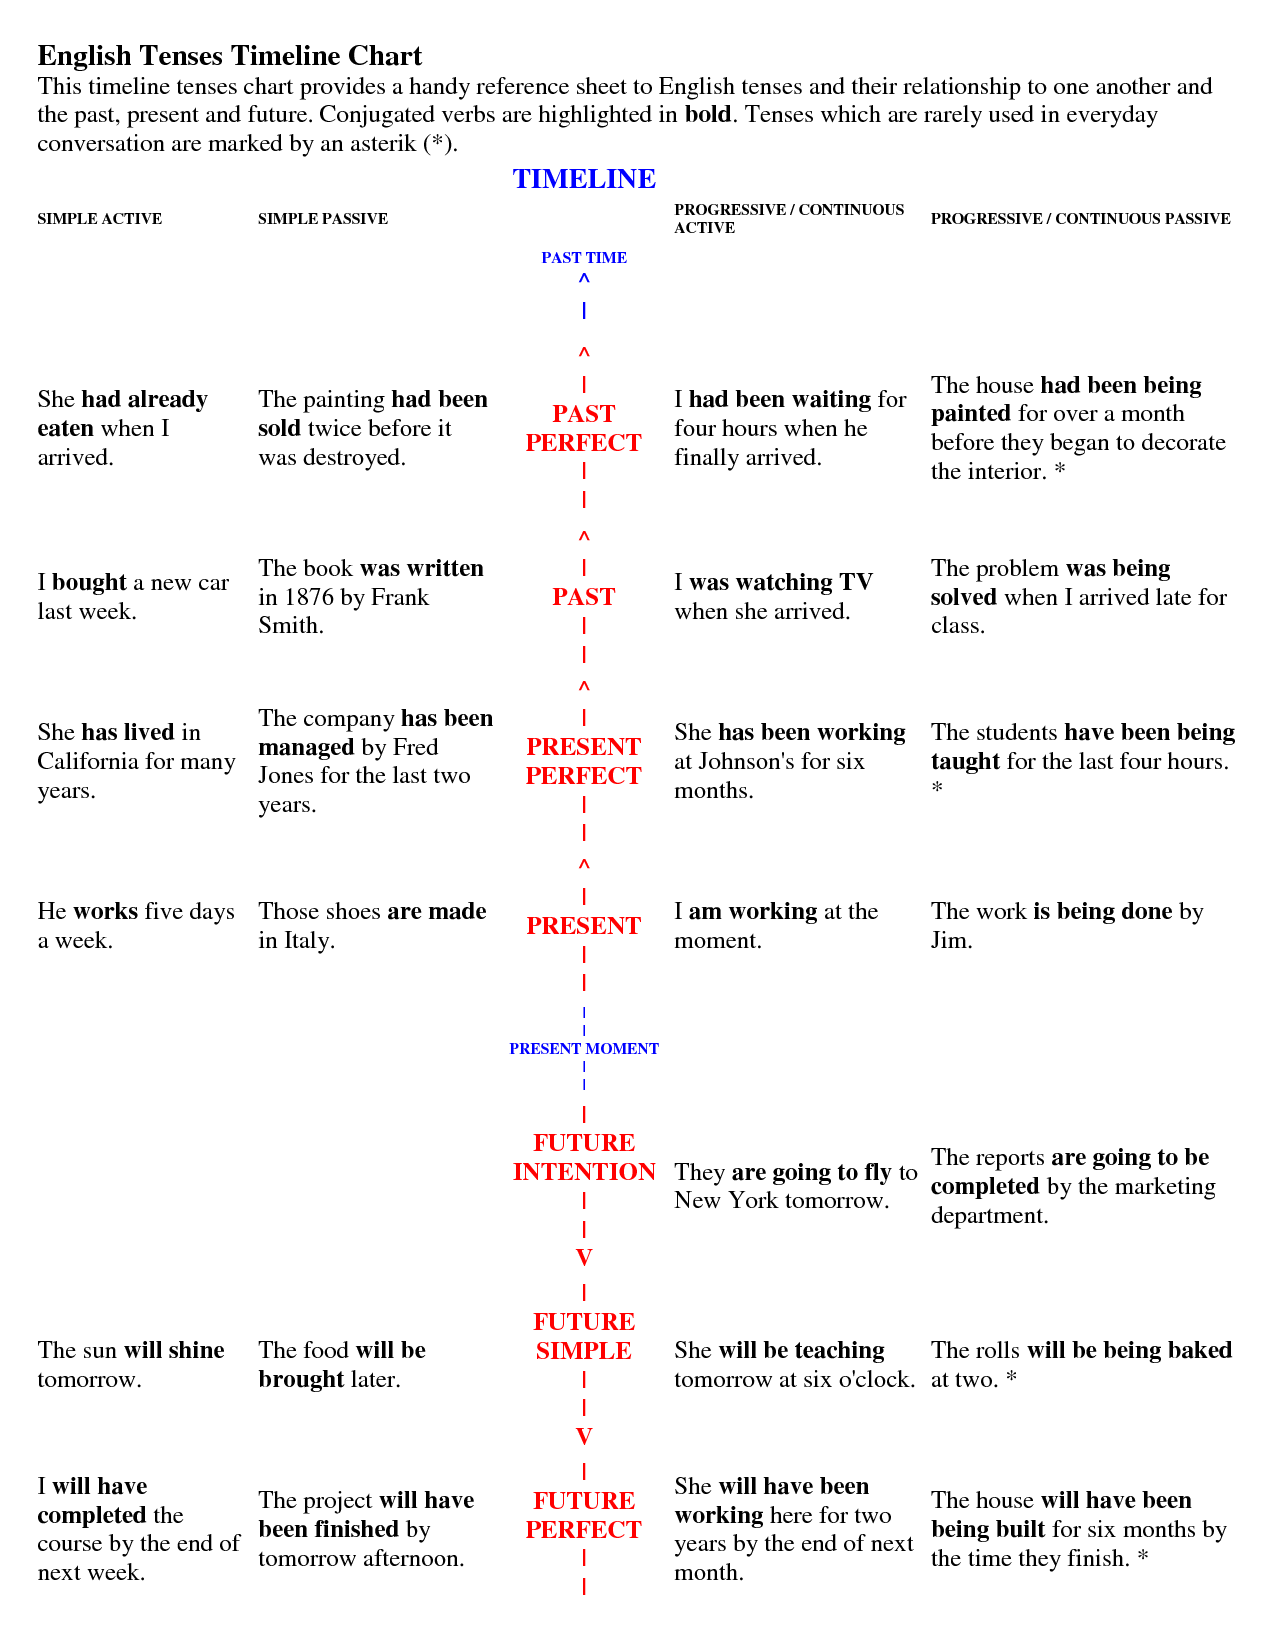 English Tenses Timeline Chart Image